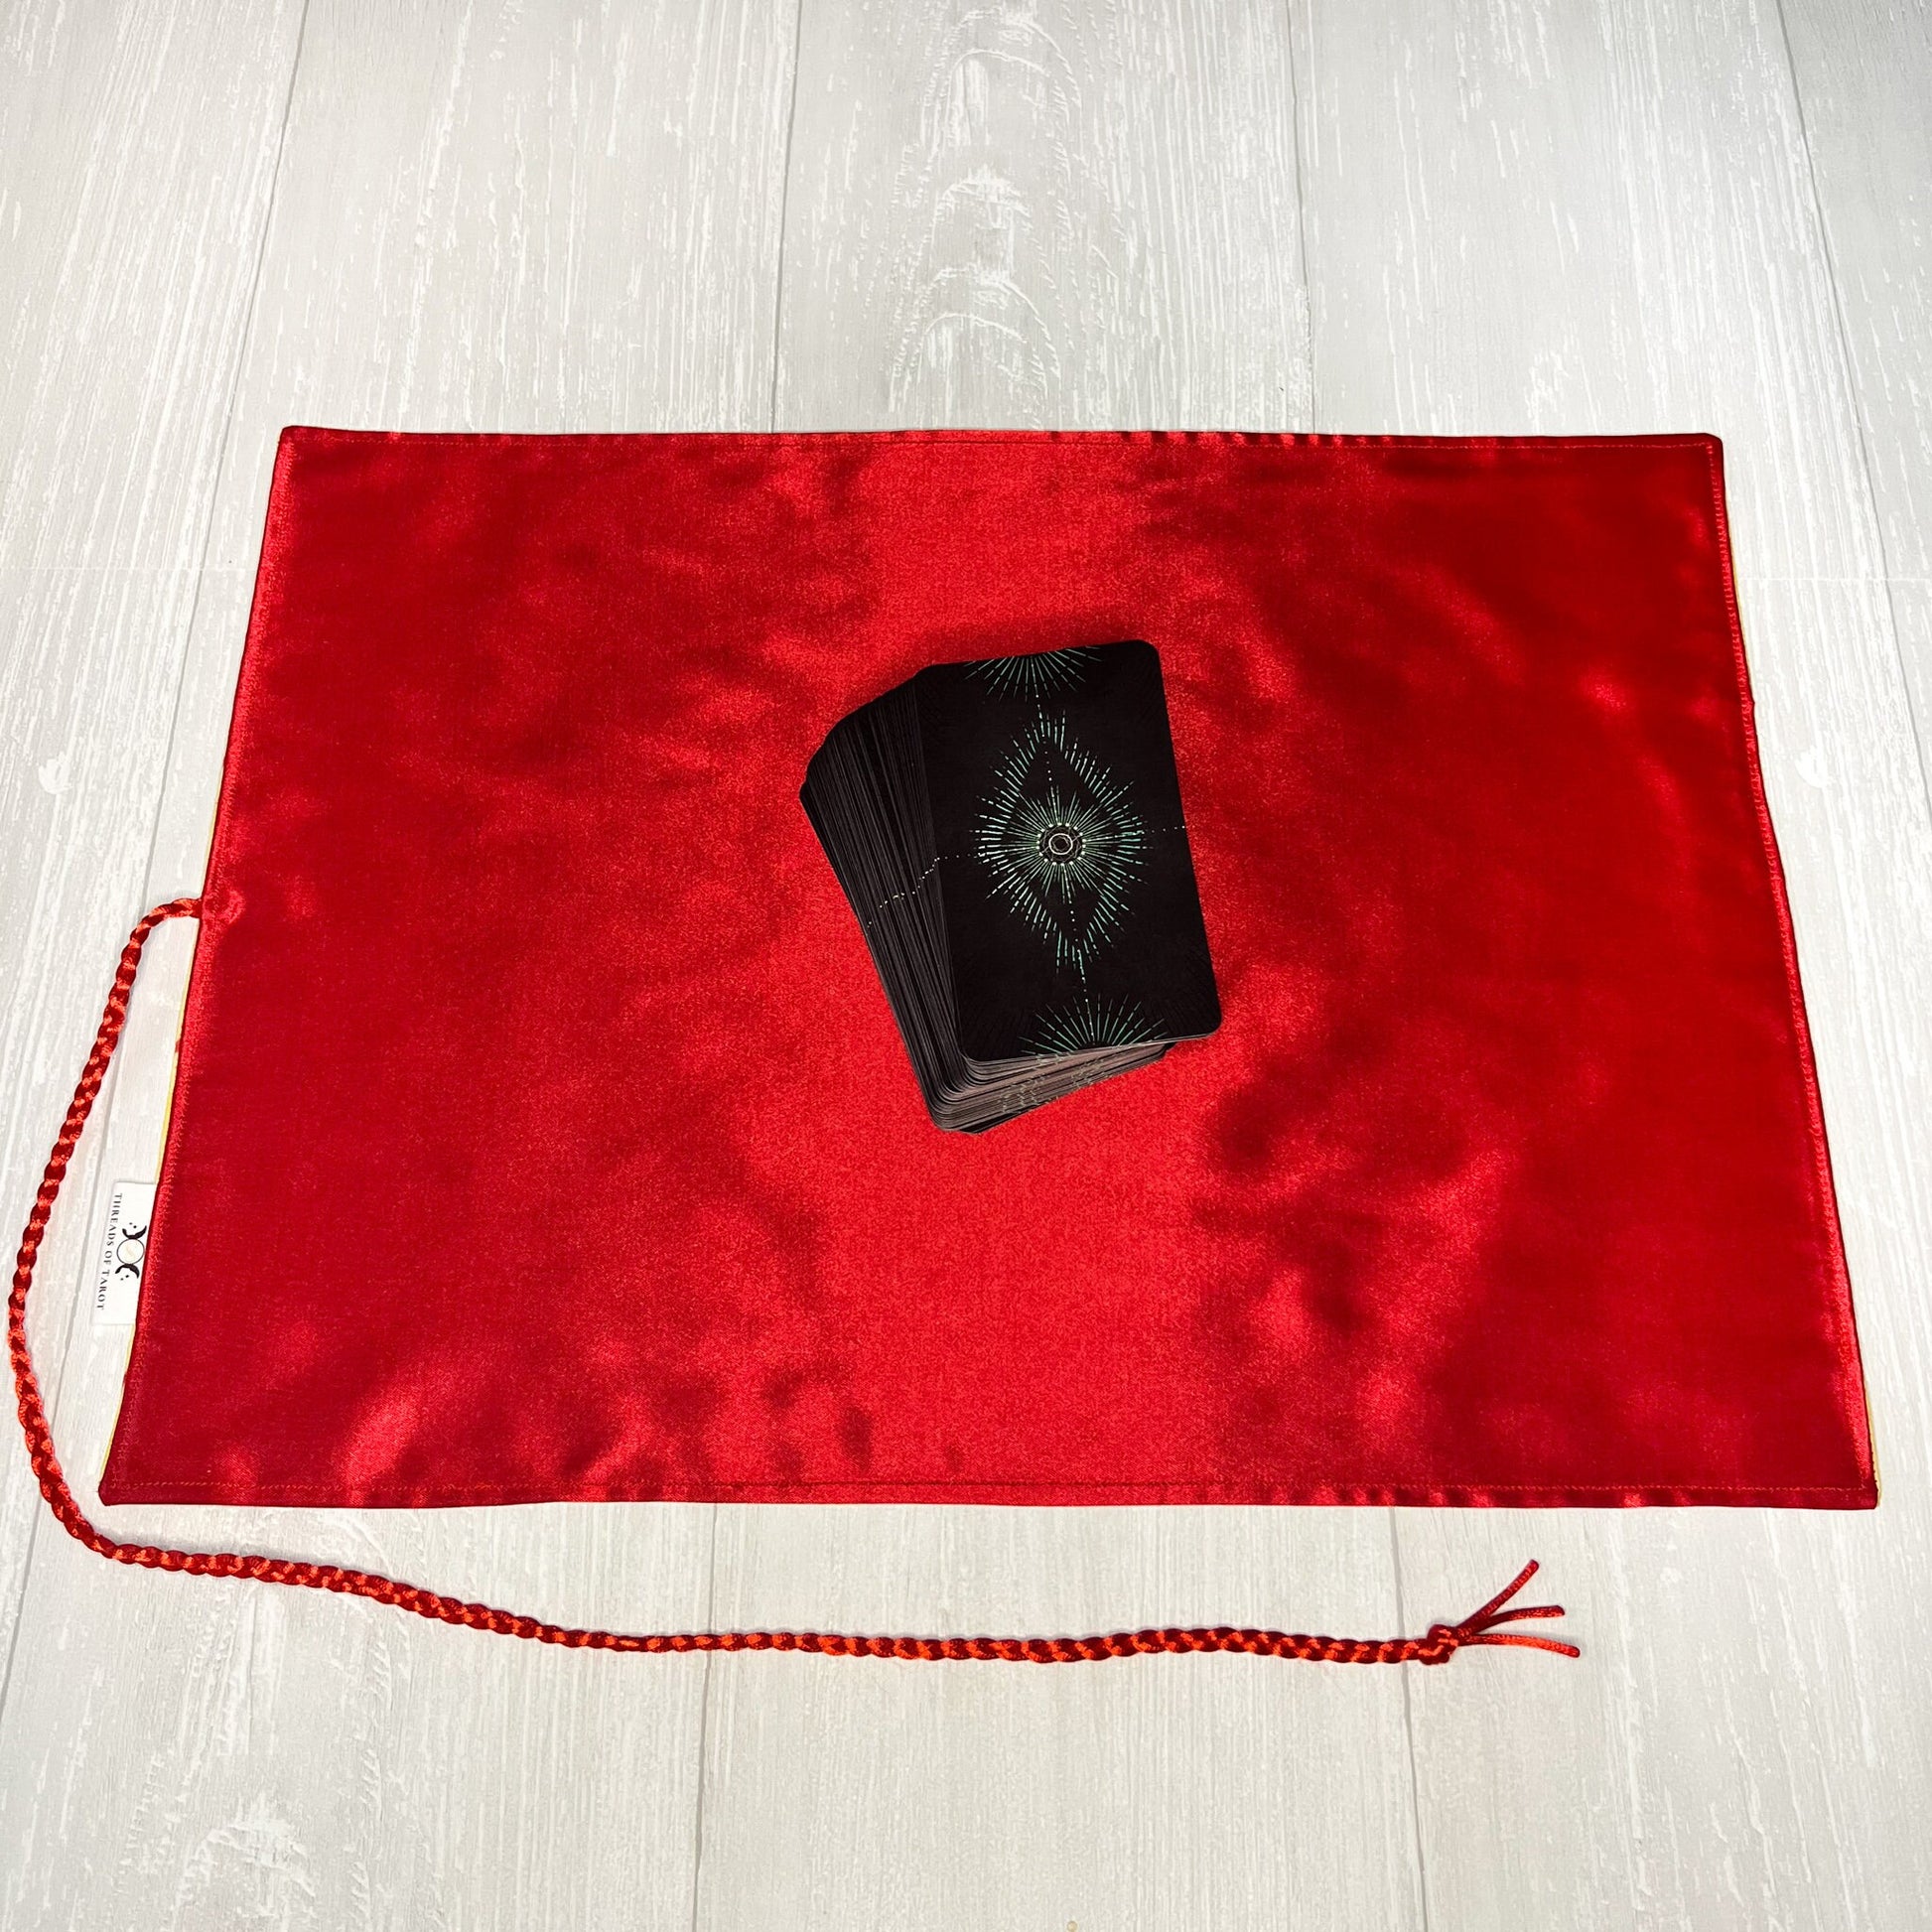 Fire Symbol Tarot Wrap, Element Tarot Deck Storage Cloth, Tarot Card Holder, Pagan Witchcraft Wiccan Divination Supplies, Tarot Accessories